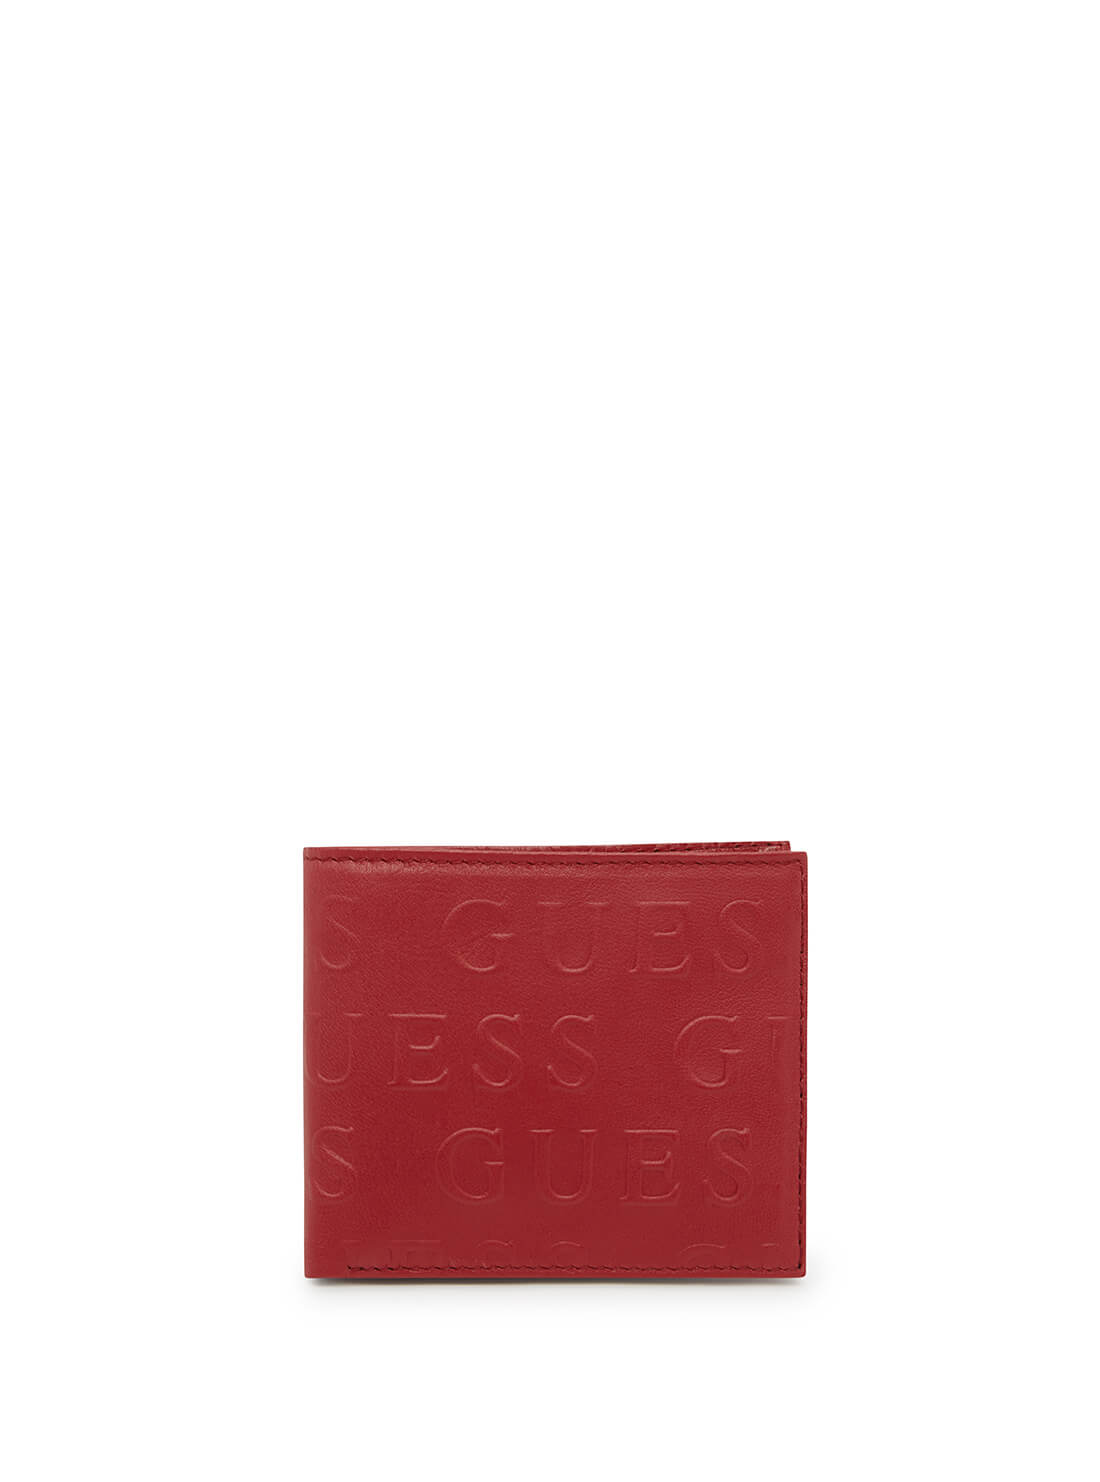 GUESS Men's Red Glenoaks Logo Passcase Wallet 31GUE22094 Front View